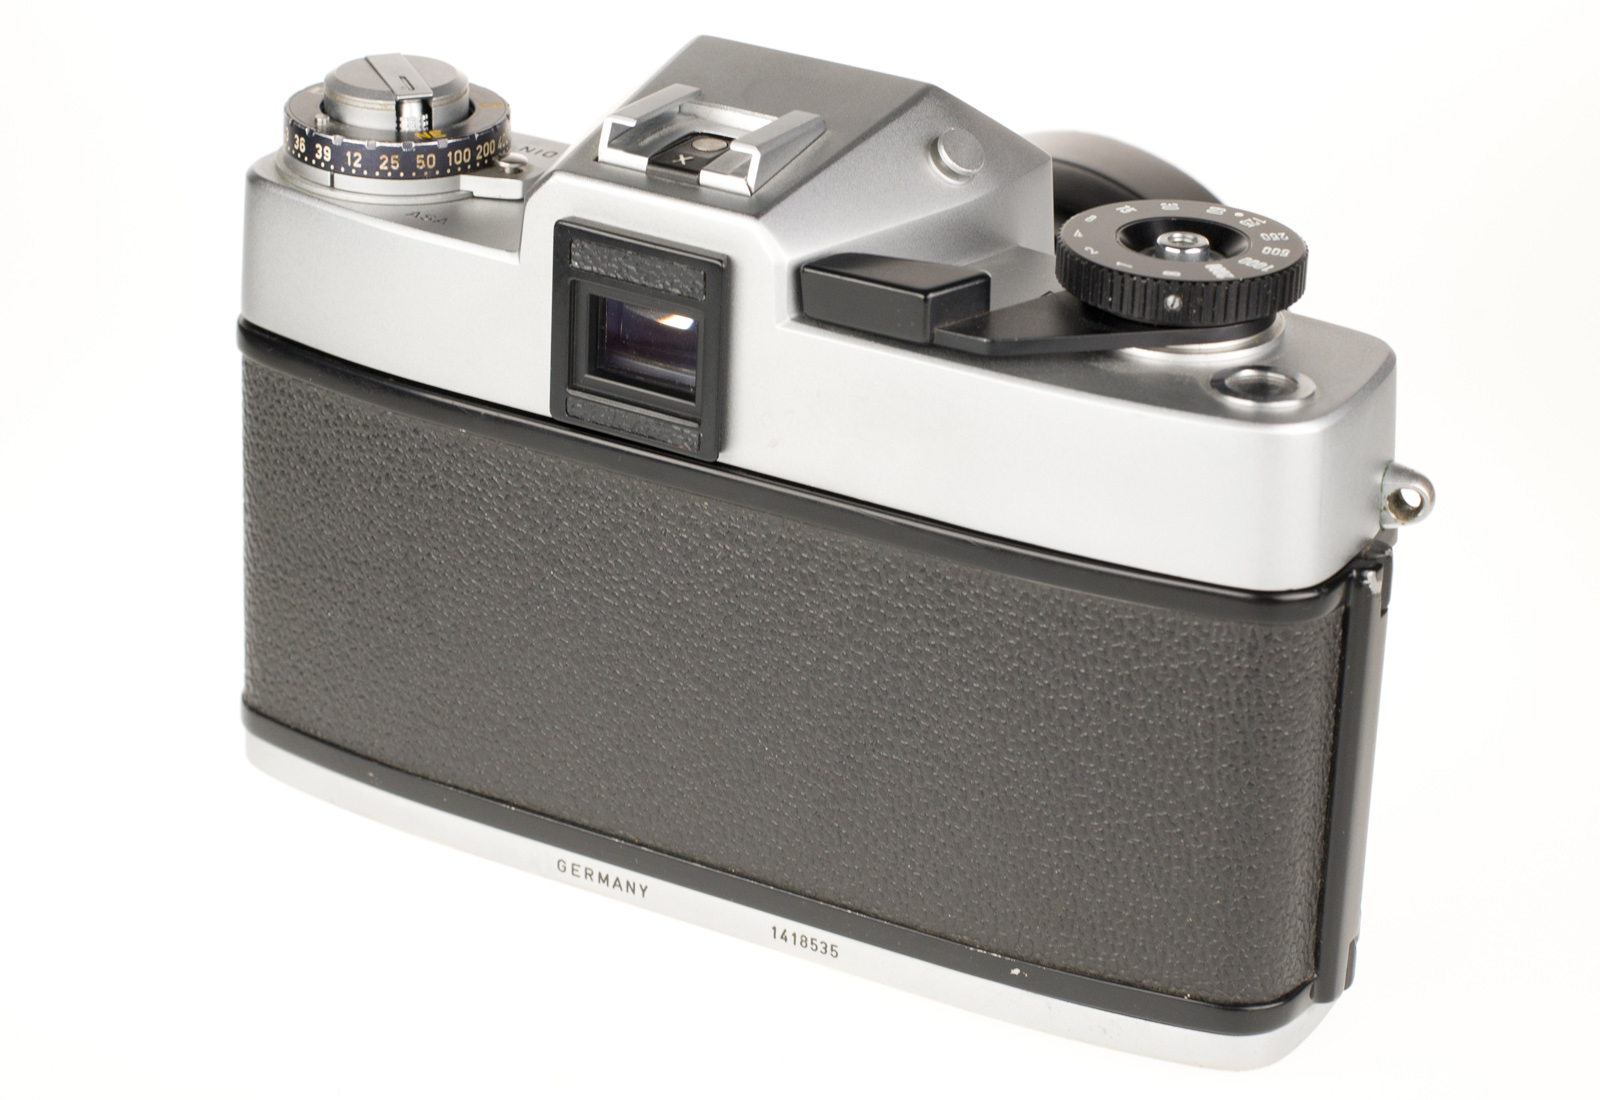 Leicaflex SL2, silver chrome + Summicron-R 1:2/50mm